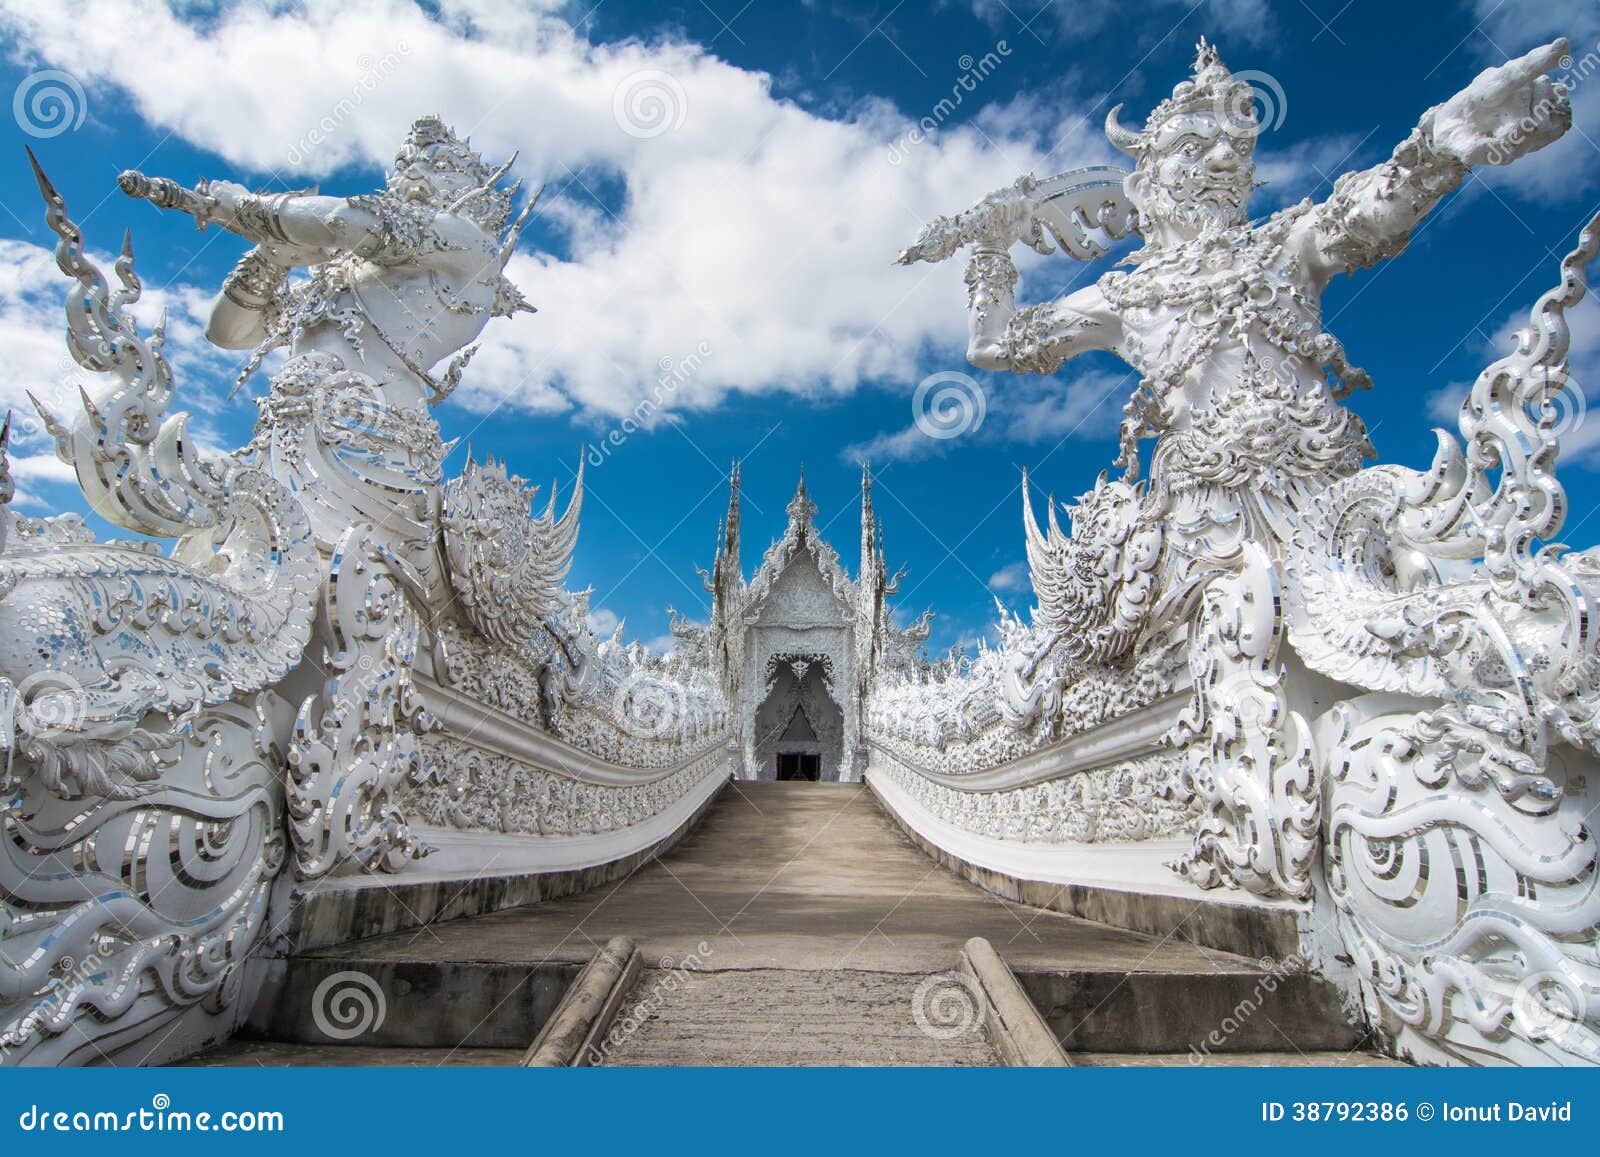 wat rong khun (white temple), chiang rai, thailand